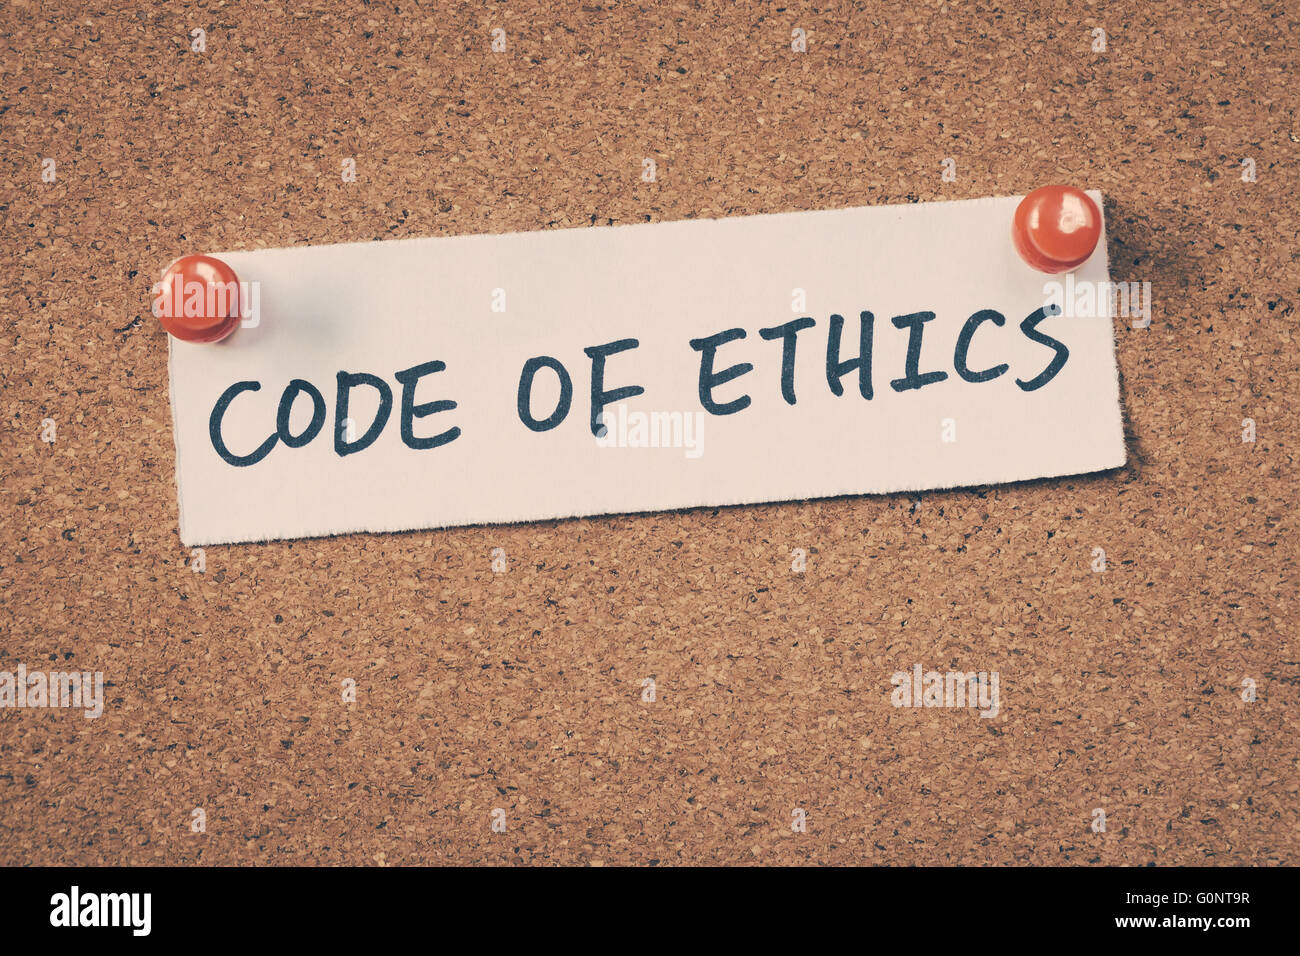 Code of ethics Stock Photo